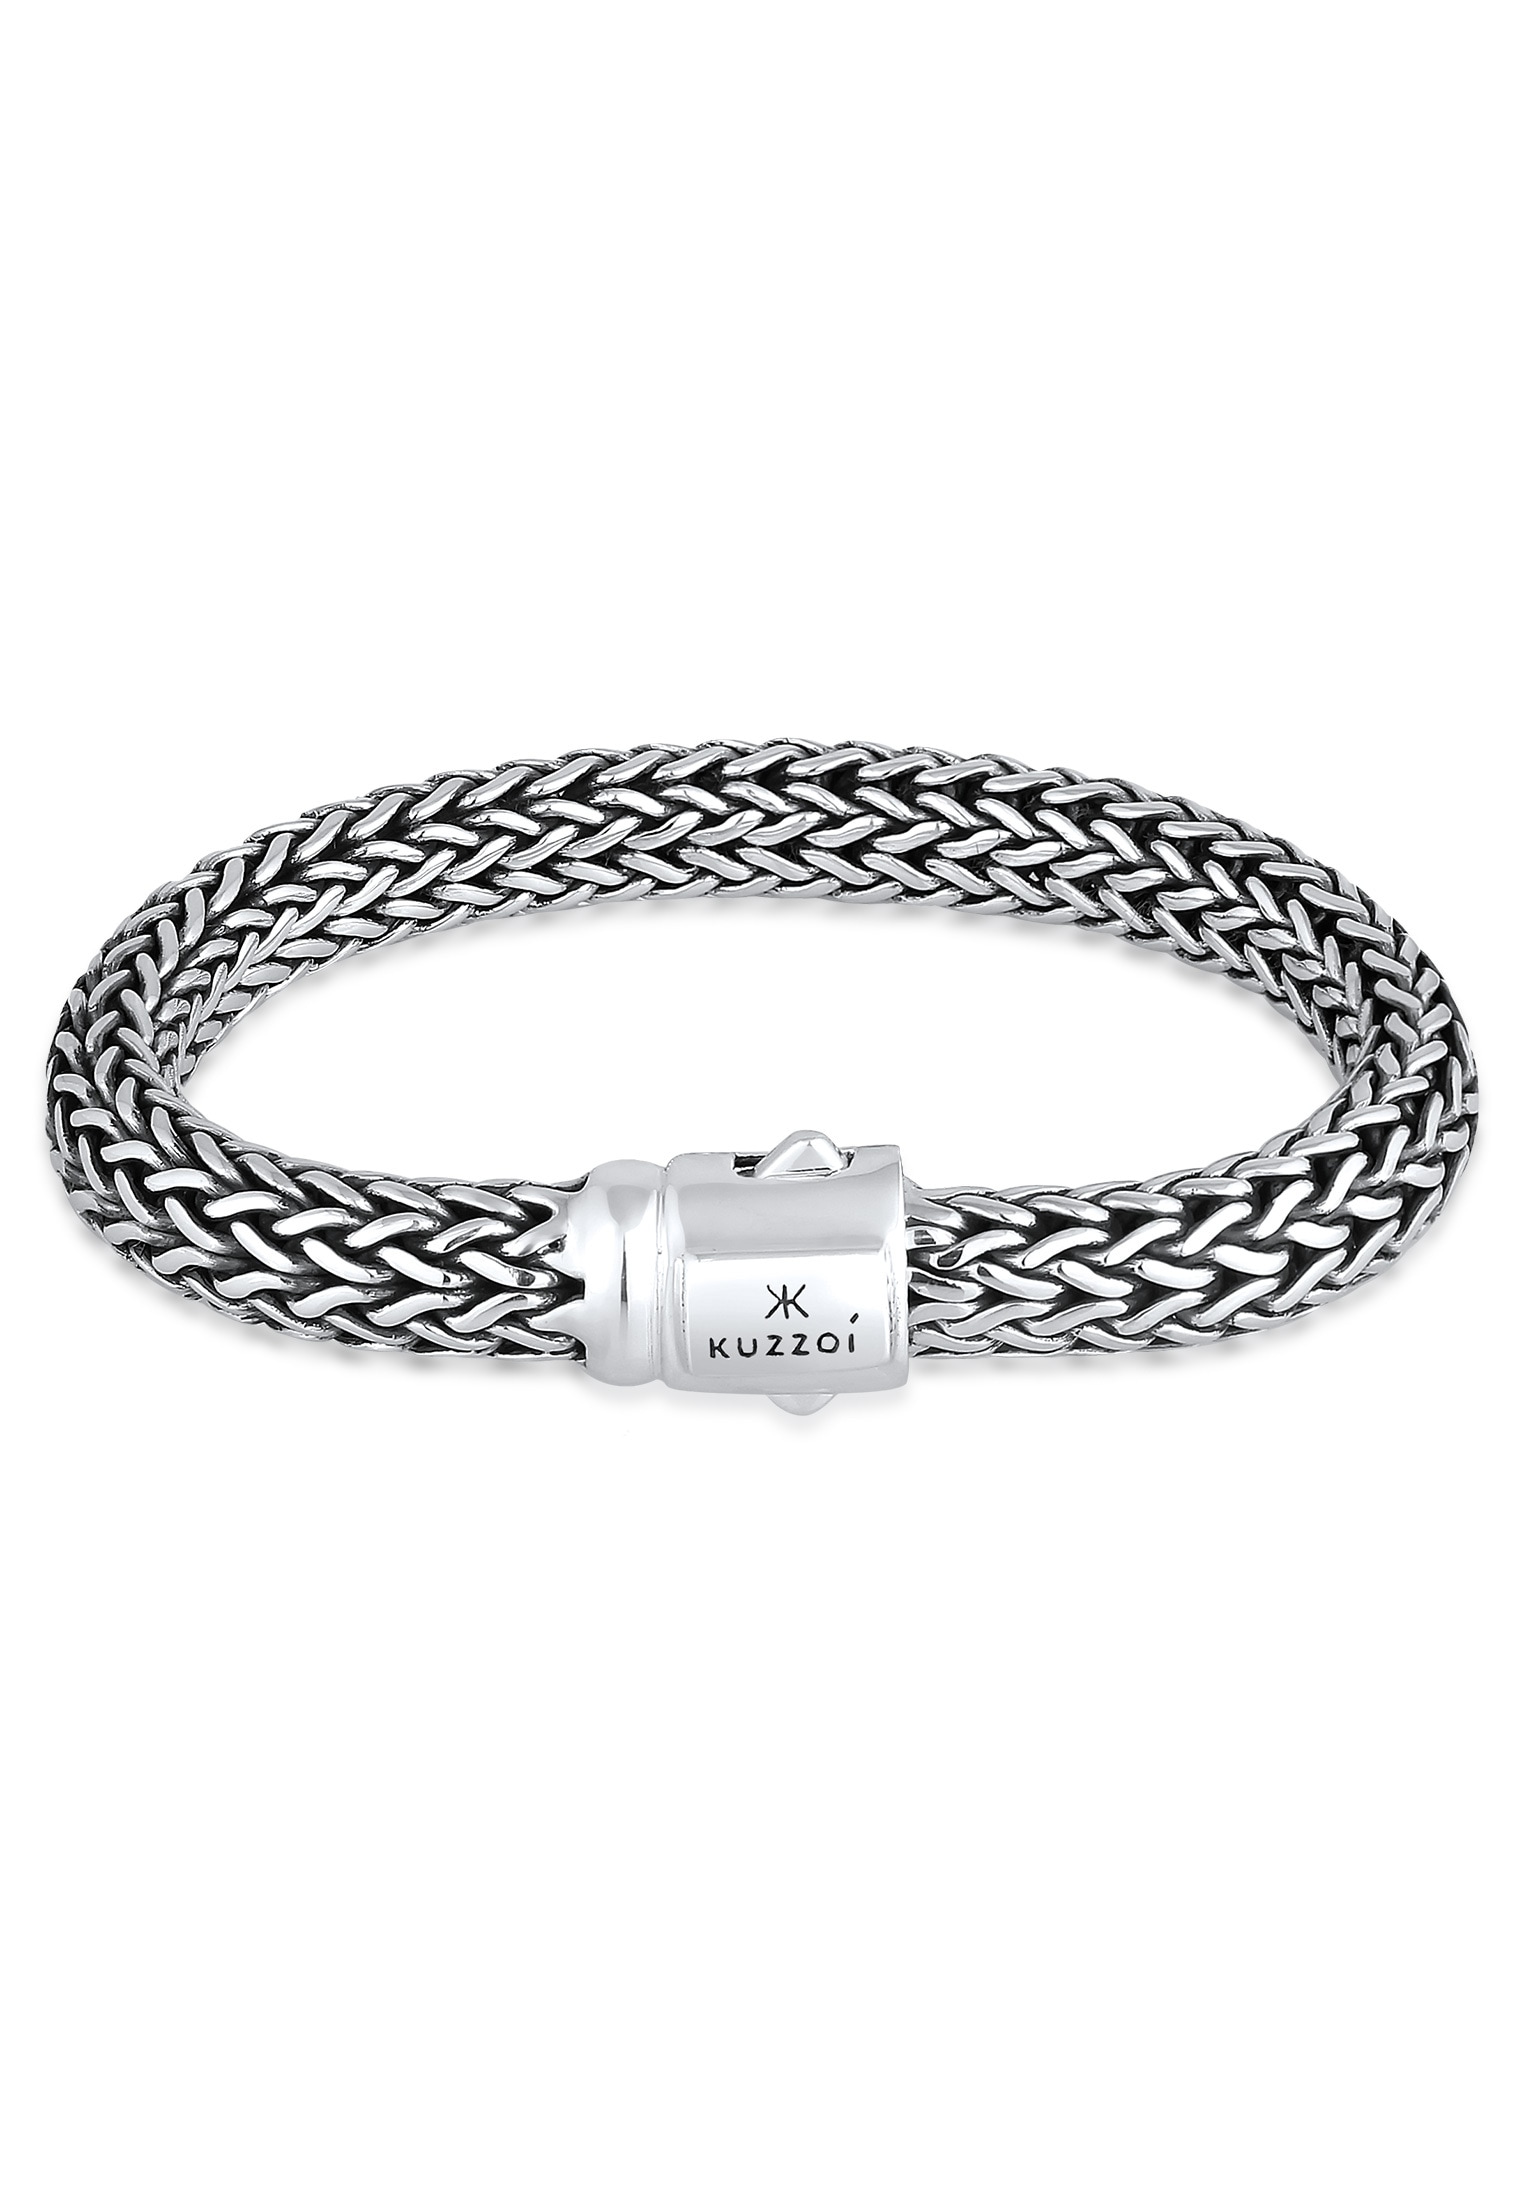 Basic unisex »Gliederarmband Cool online Silber« 925 bei Kuzzoi Armband